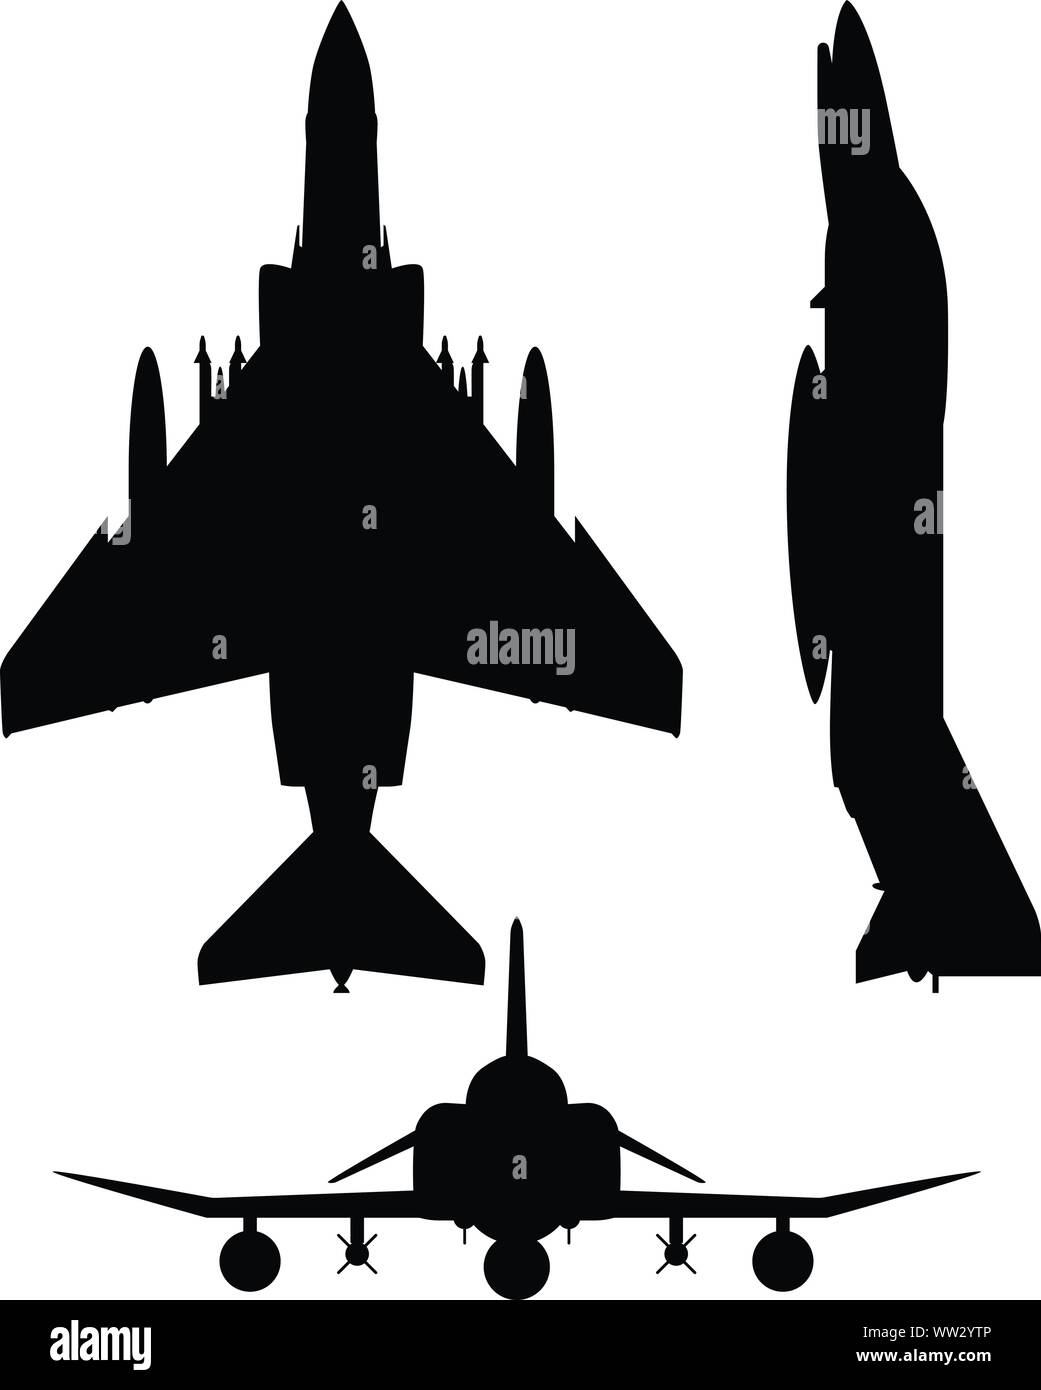 F-4 Phantom II militärischen Fighter Jet Silhouette Vector Illustration Stock Vektor